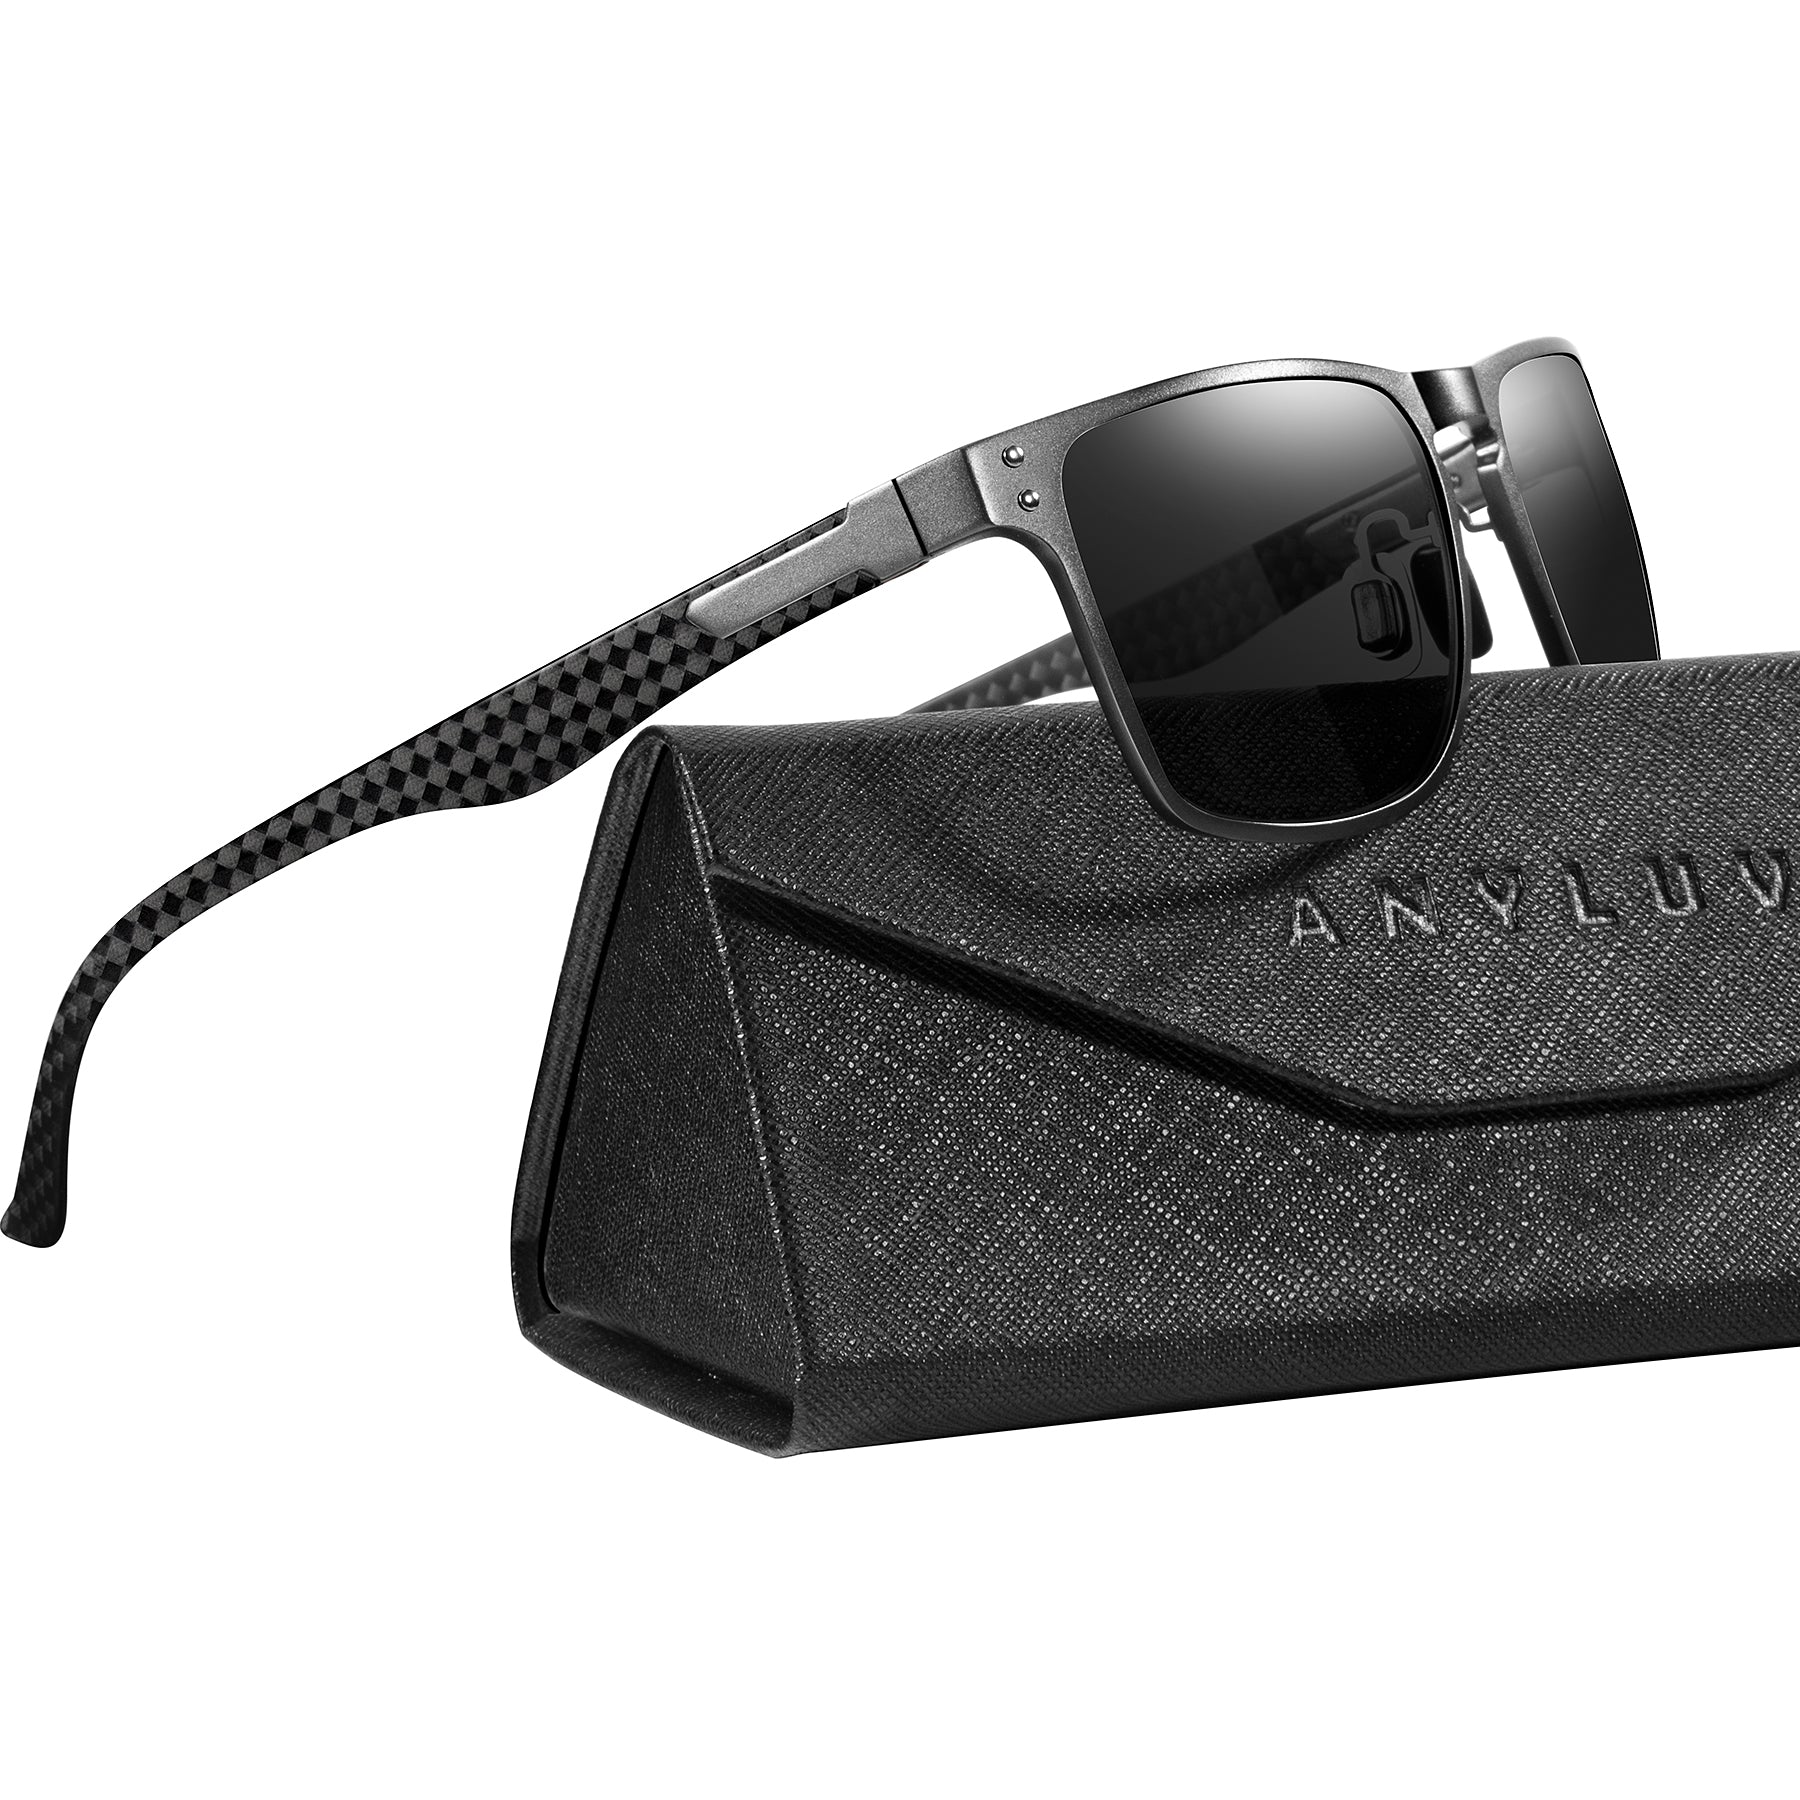 Luxury Carbon Fiber Temple Sunglasses S52-2